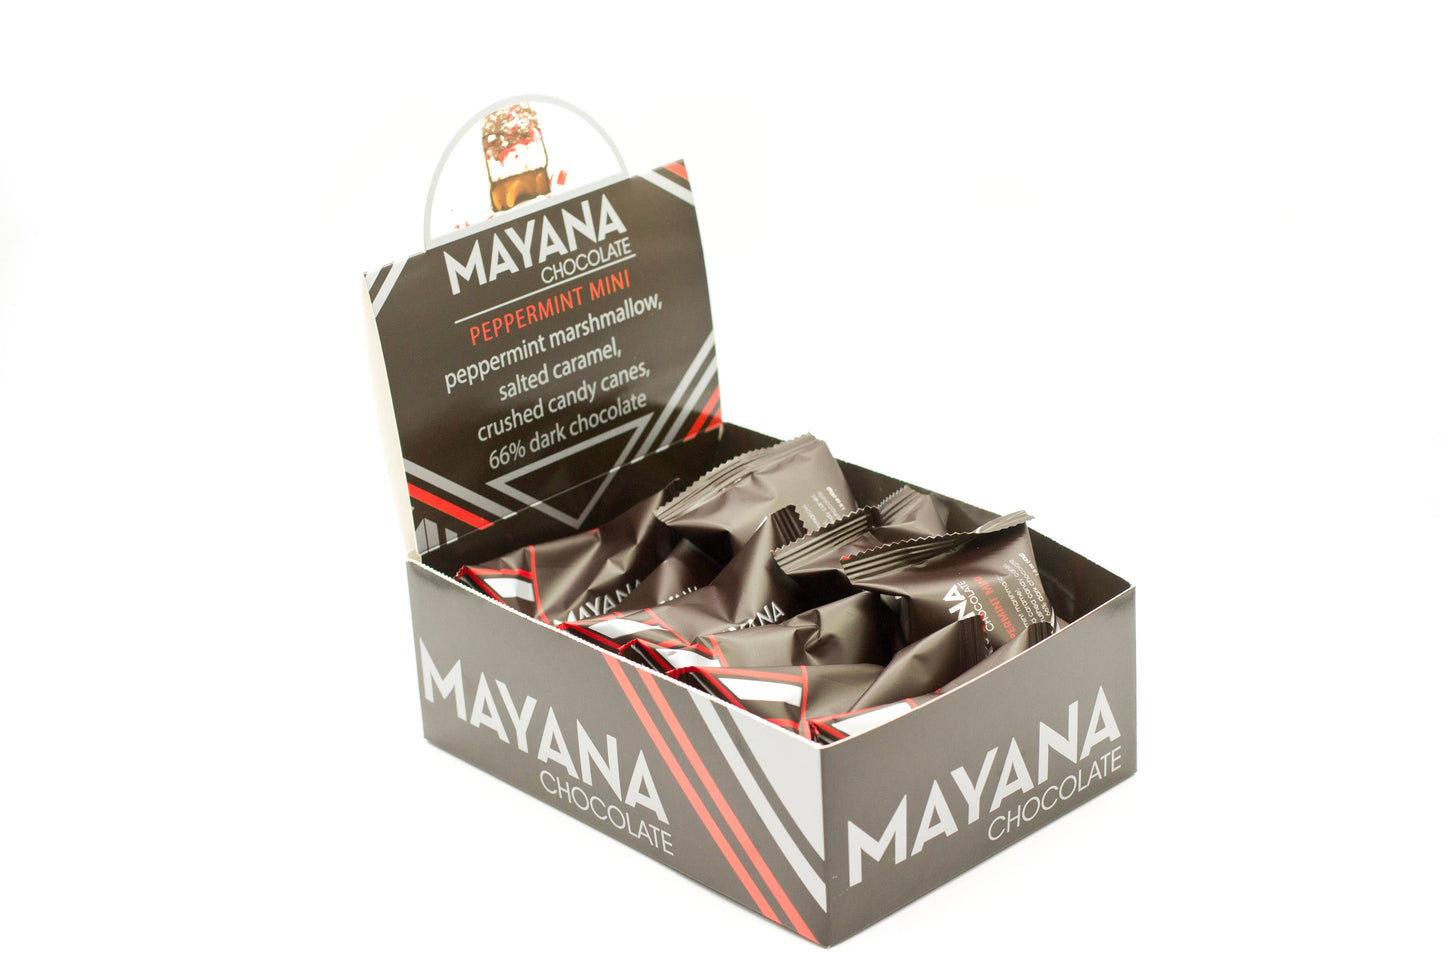 Peppermint Mini Chocolate Bar by Mayana Chocolate